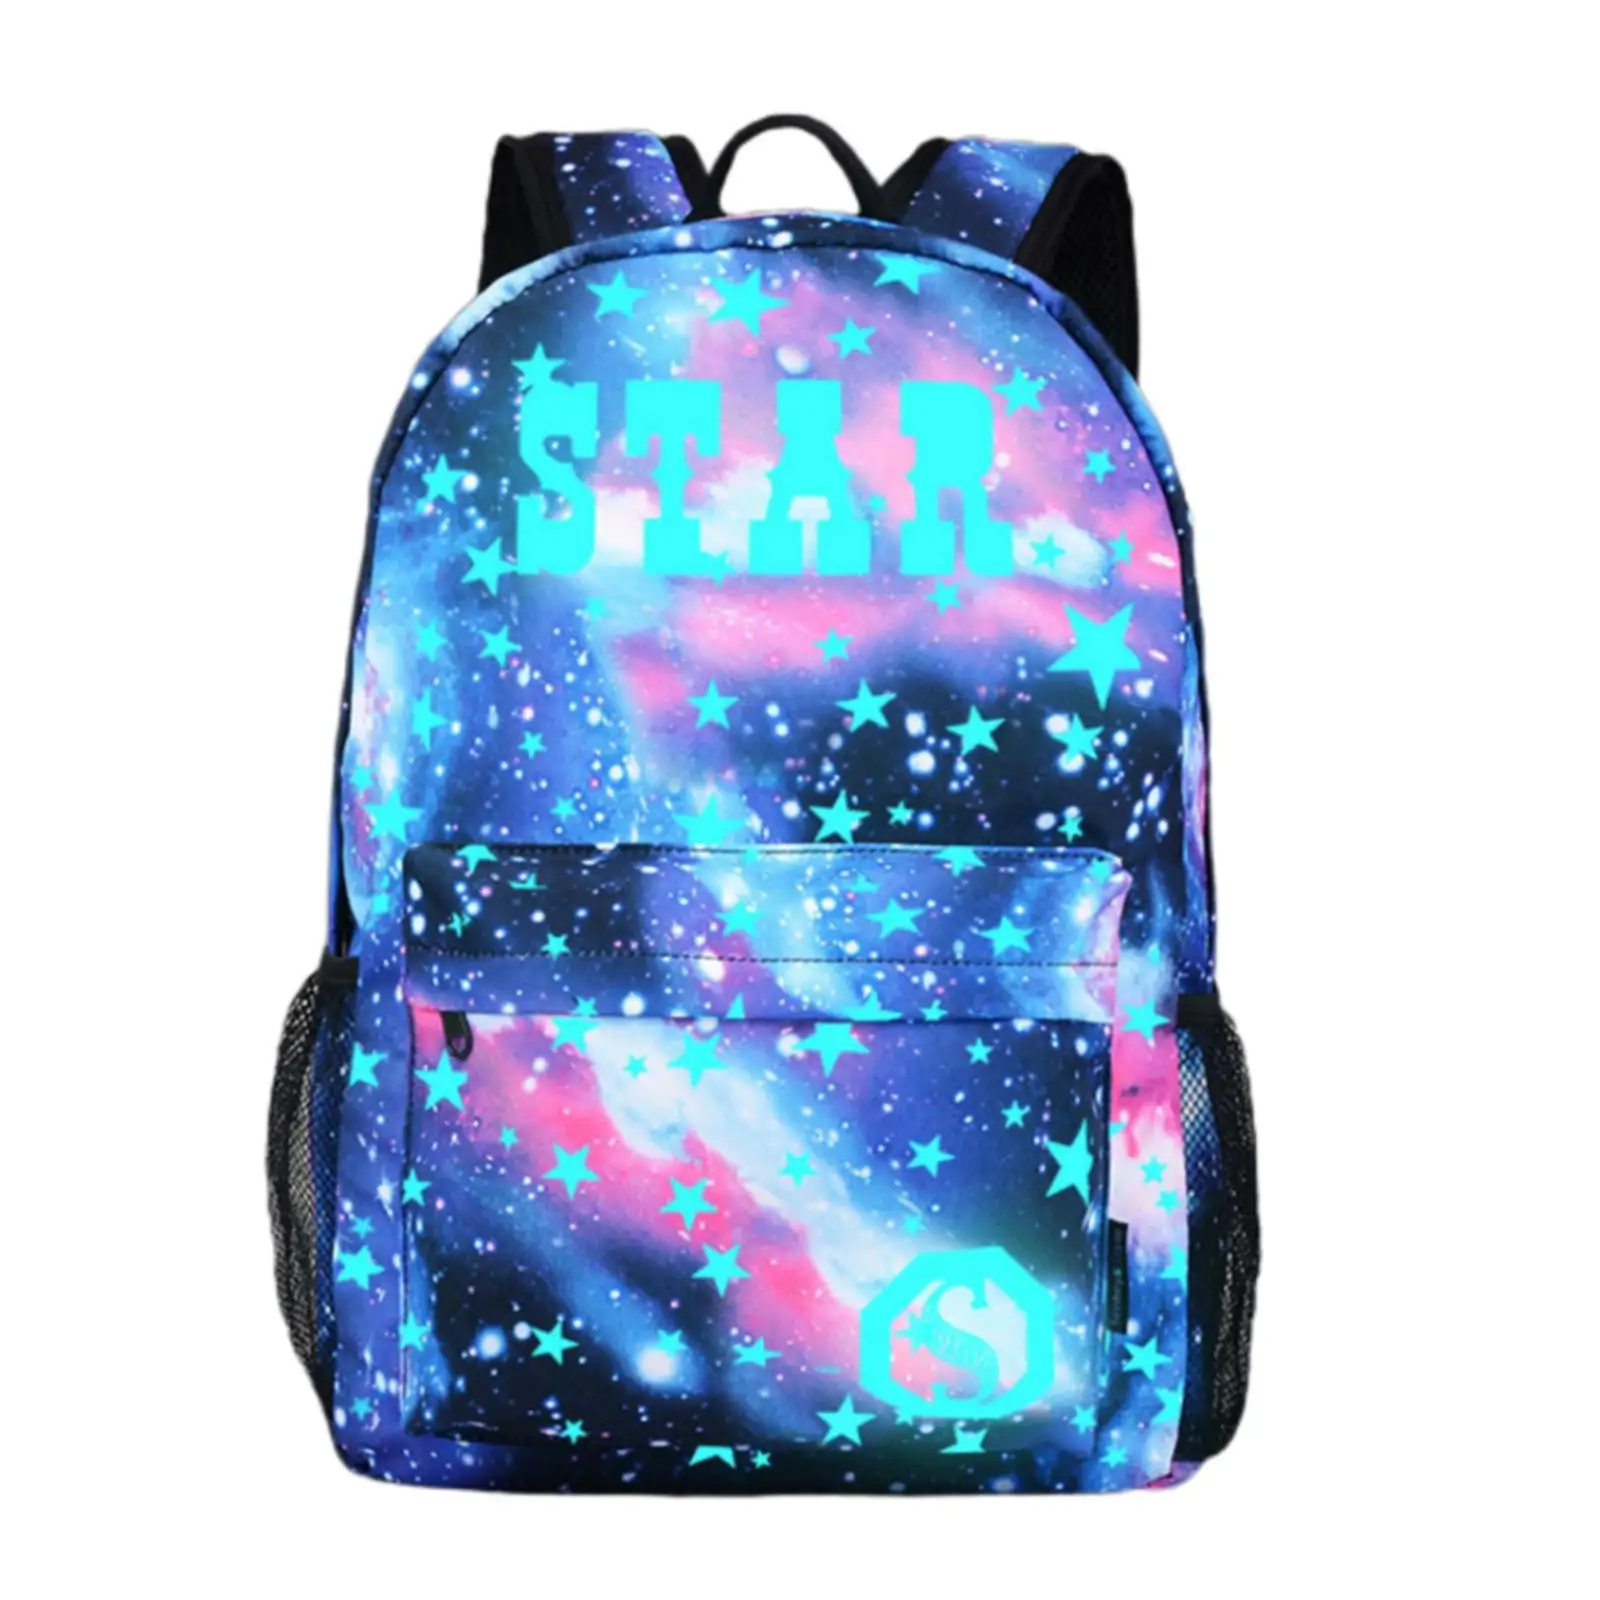 Kids Luminous School Backpack Shoulder Bag Rucksack with USB Charging Port